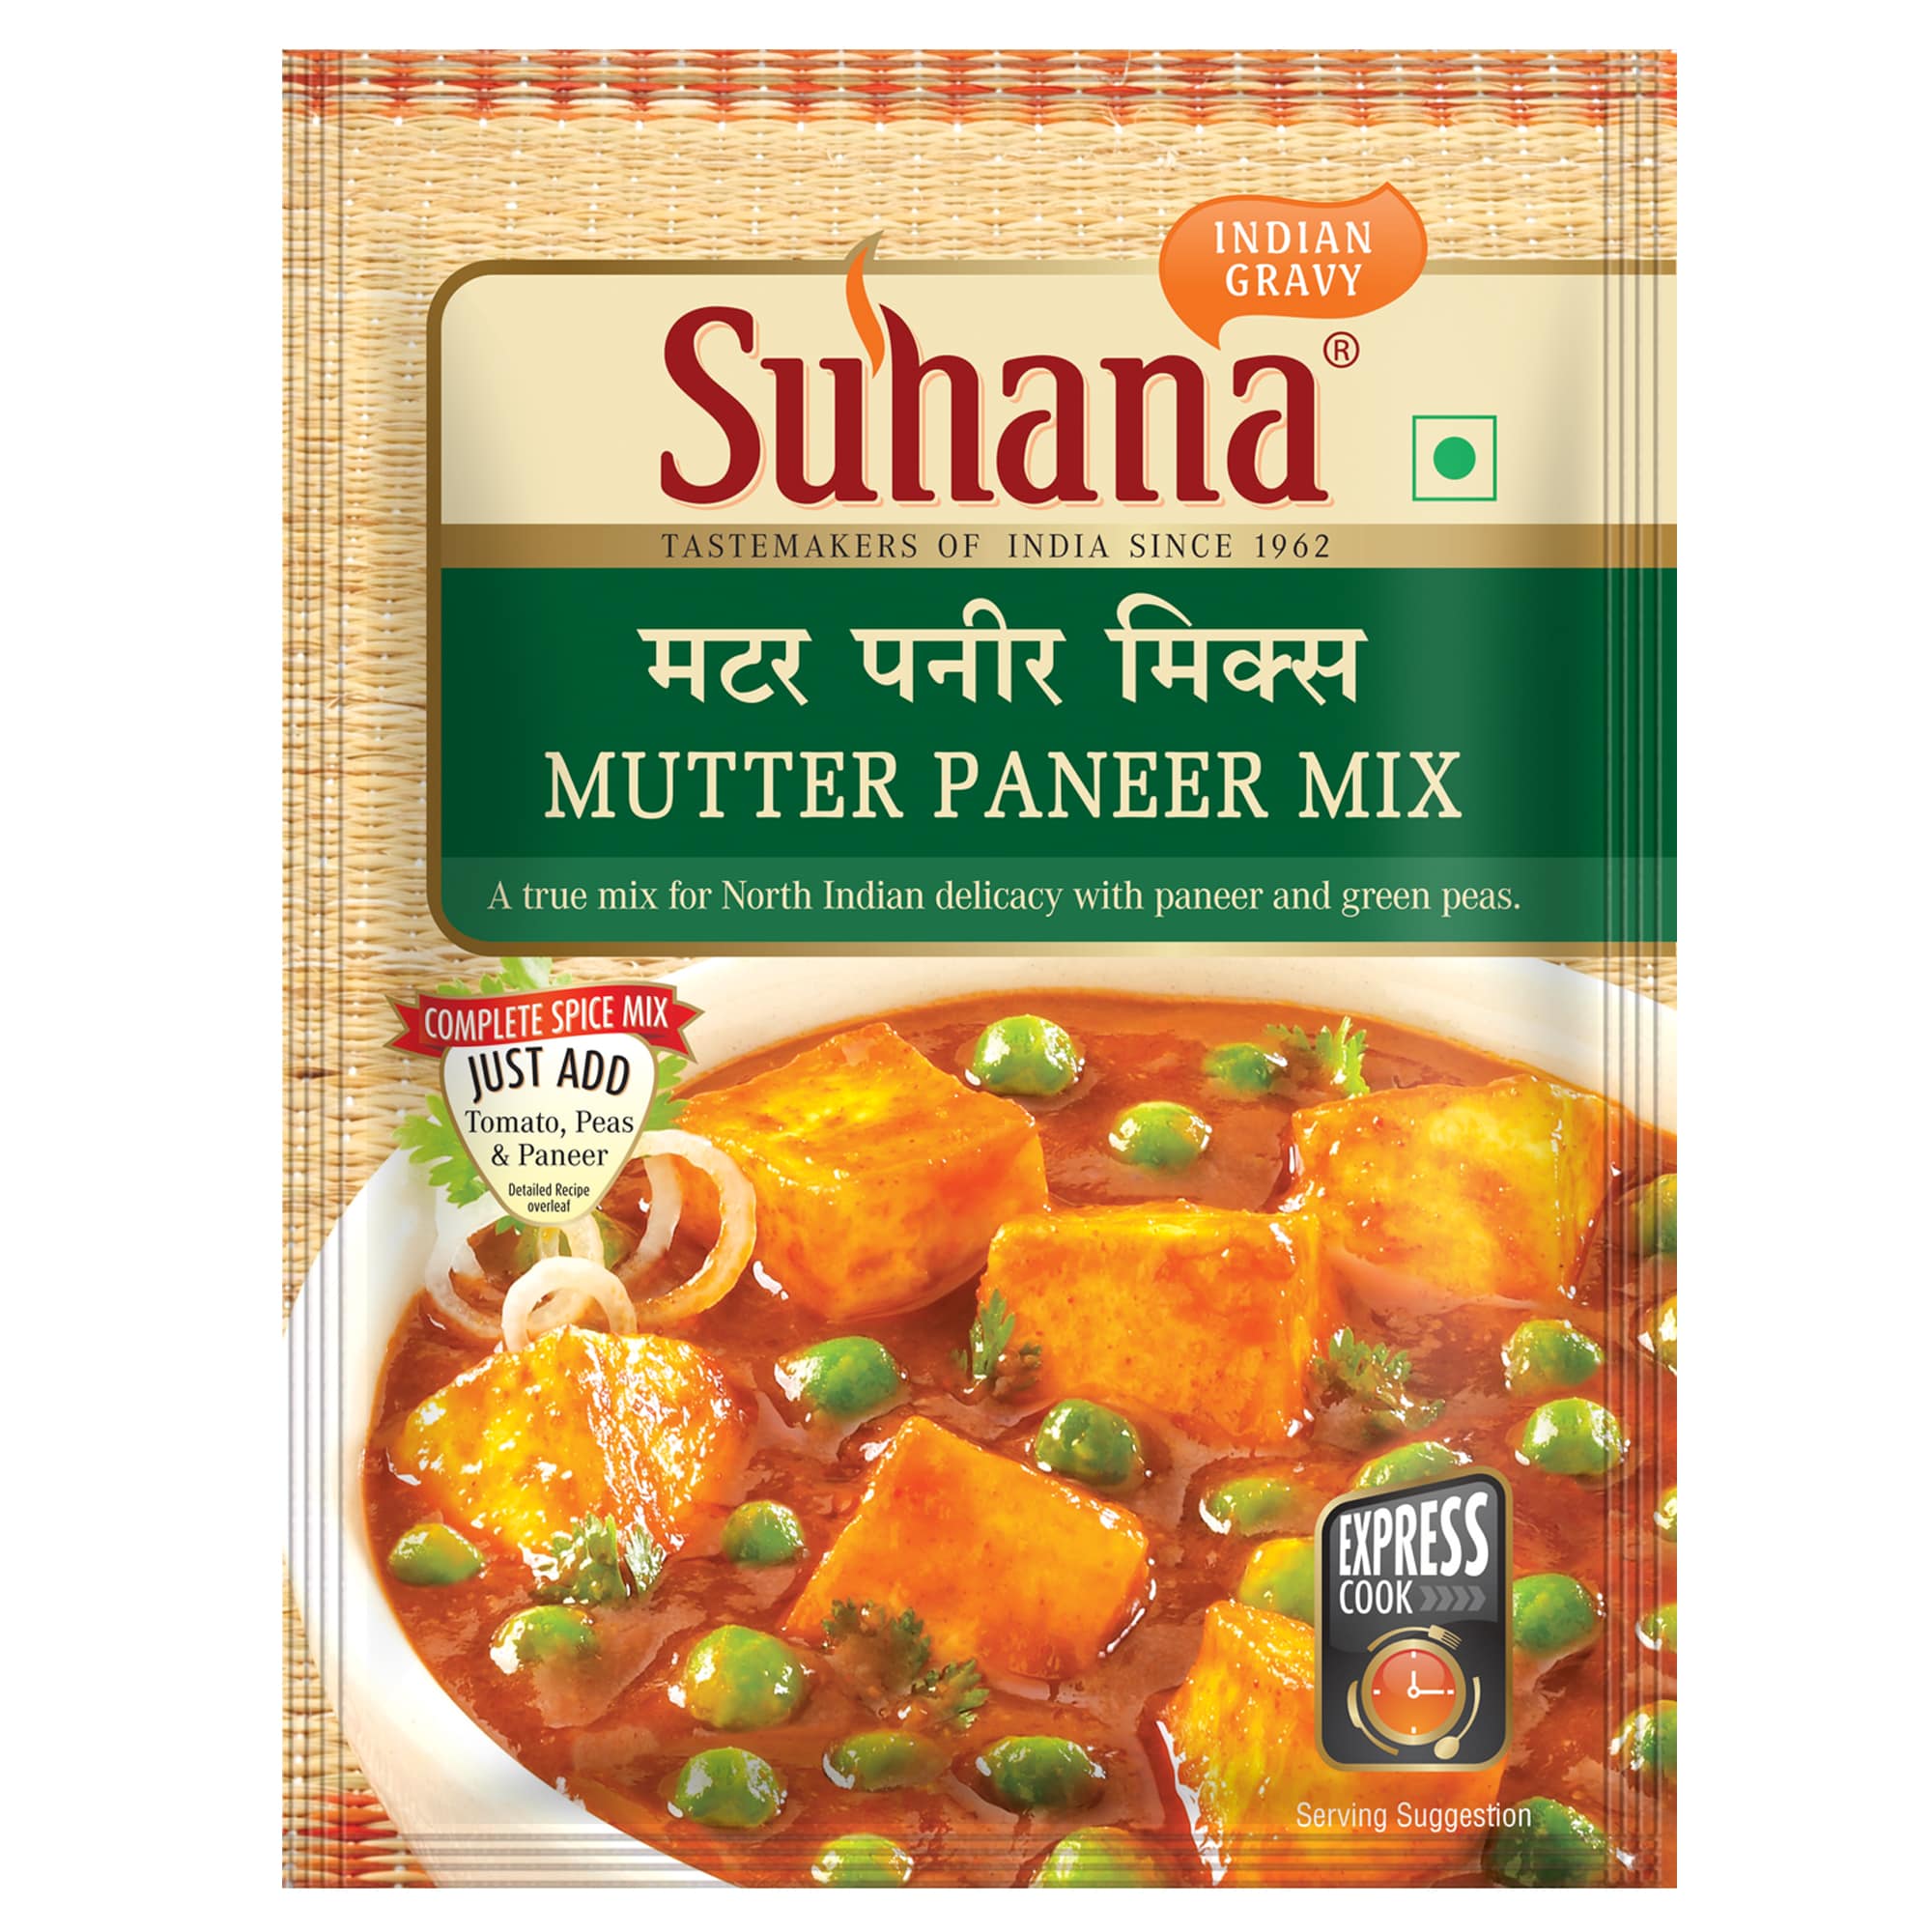 Suhana Mutter Paneer Spice Mix 50g Pouch